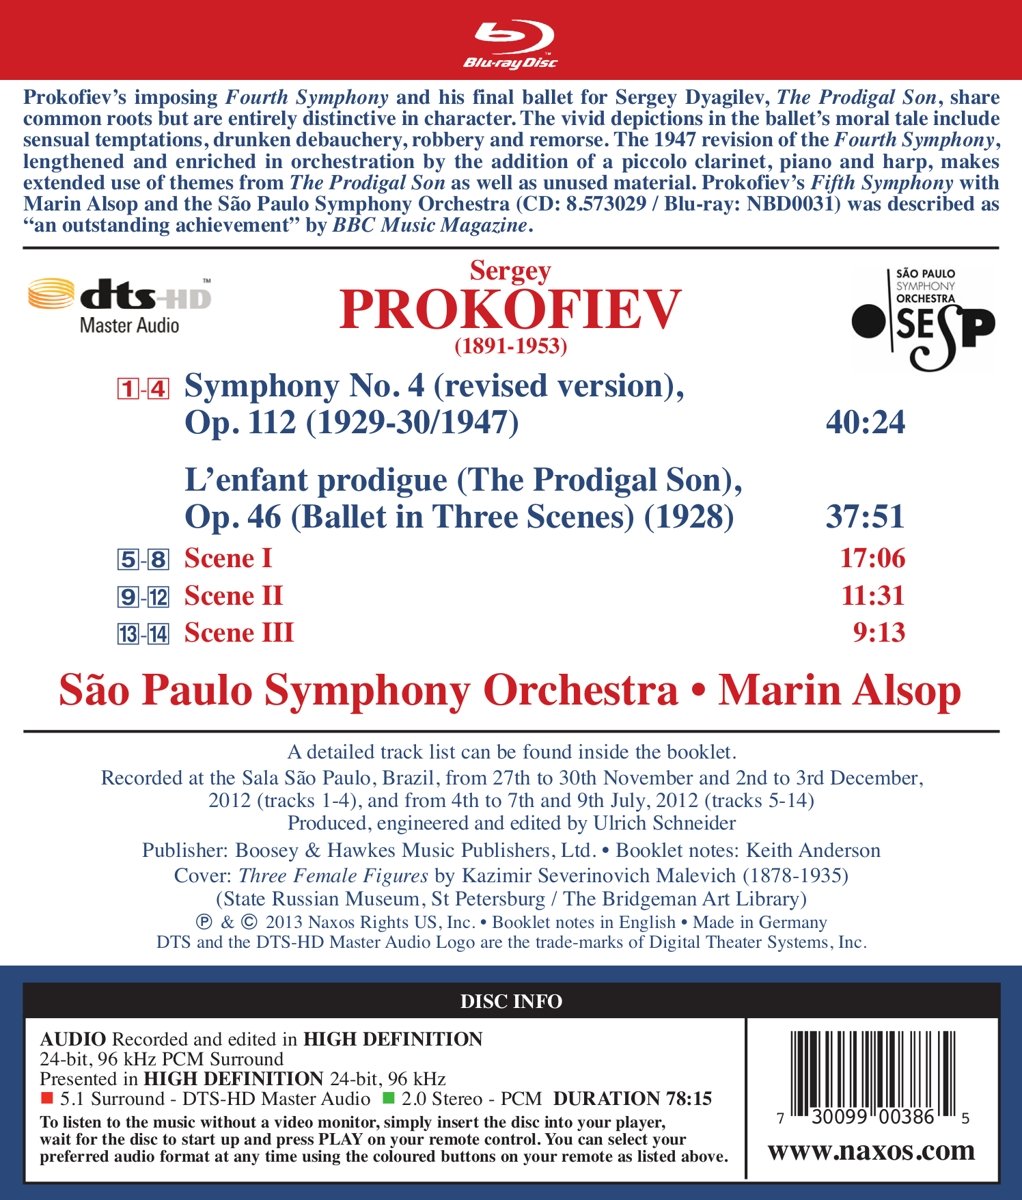 Marin Alsop 프로코피에프: 교향곡 4번 - 수정버전, 발레 돌아온 탕아 (Prokofiev: Symphony No.4 - revised version, The Prodigal Son) 